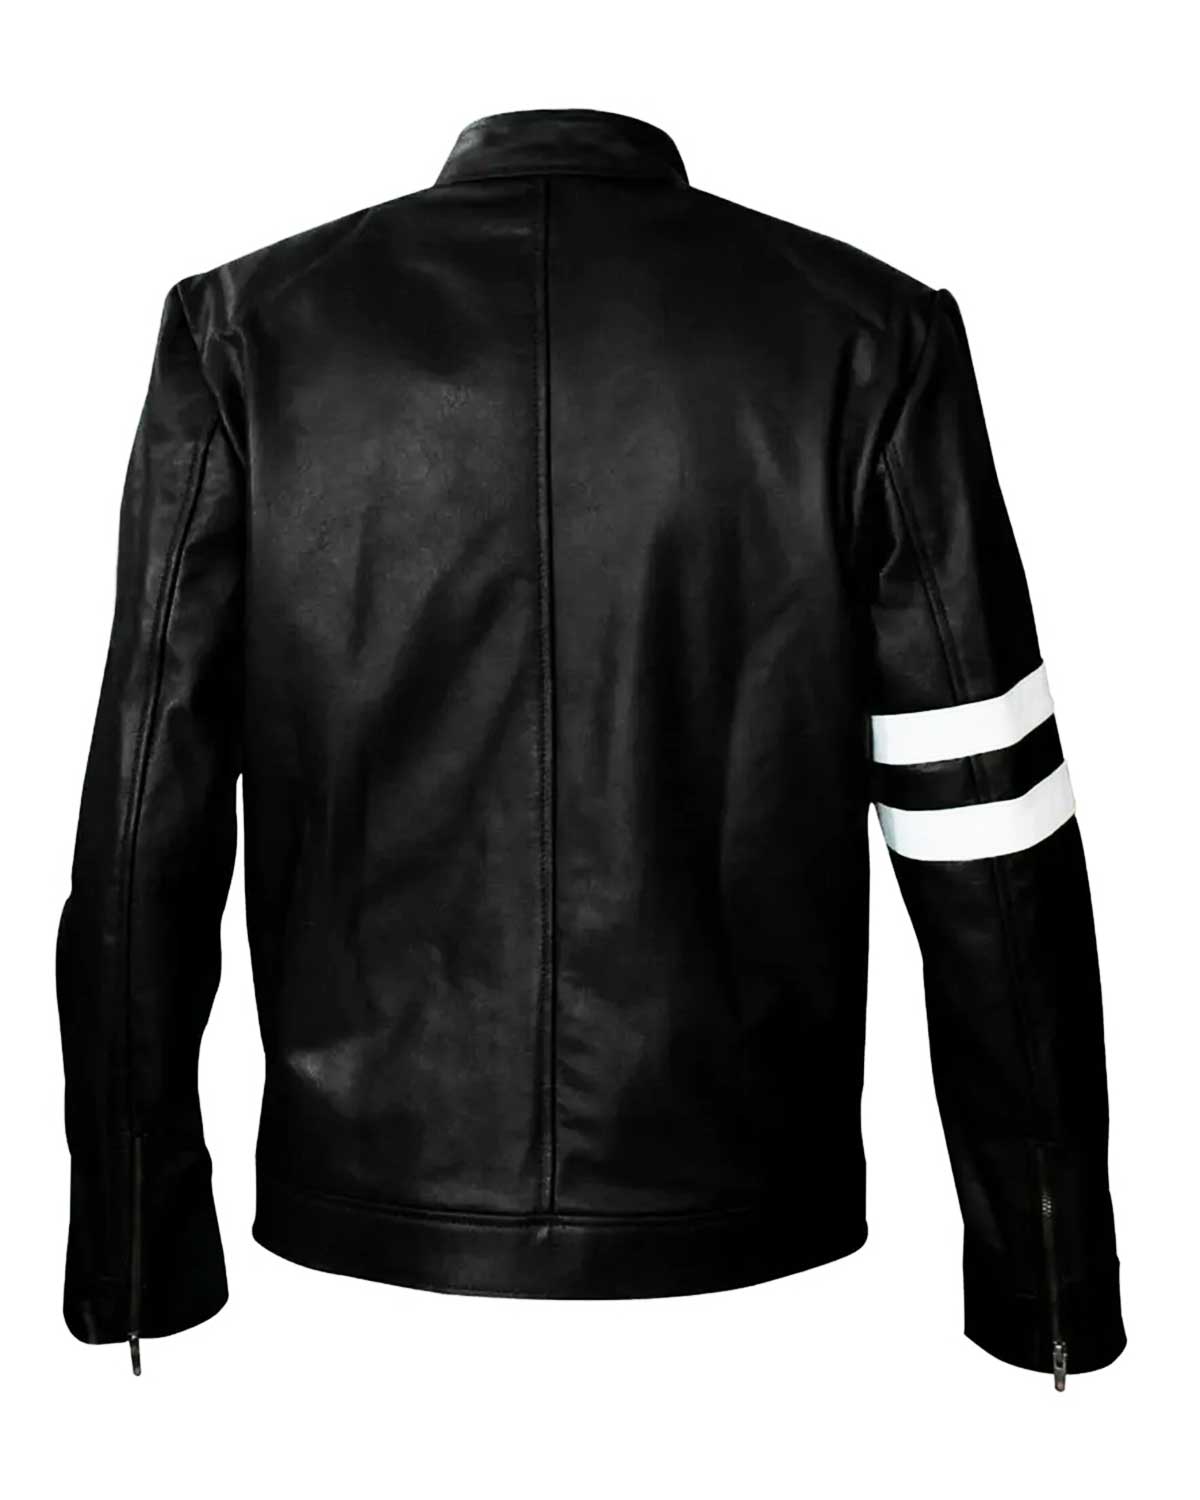 Ben 10 Cartoon Albedo Leather Jacket | Elite Jacket